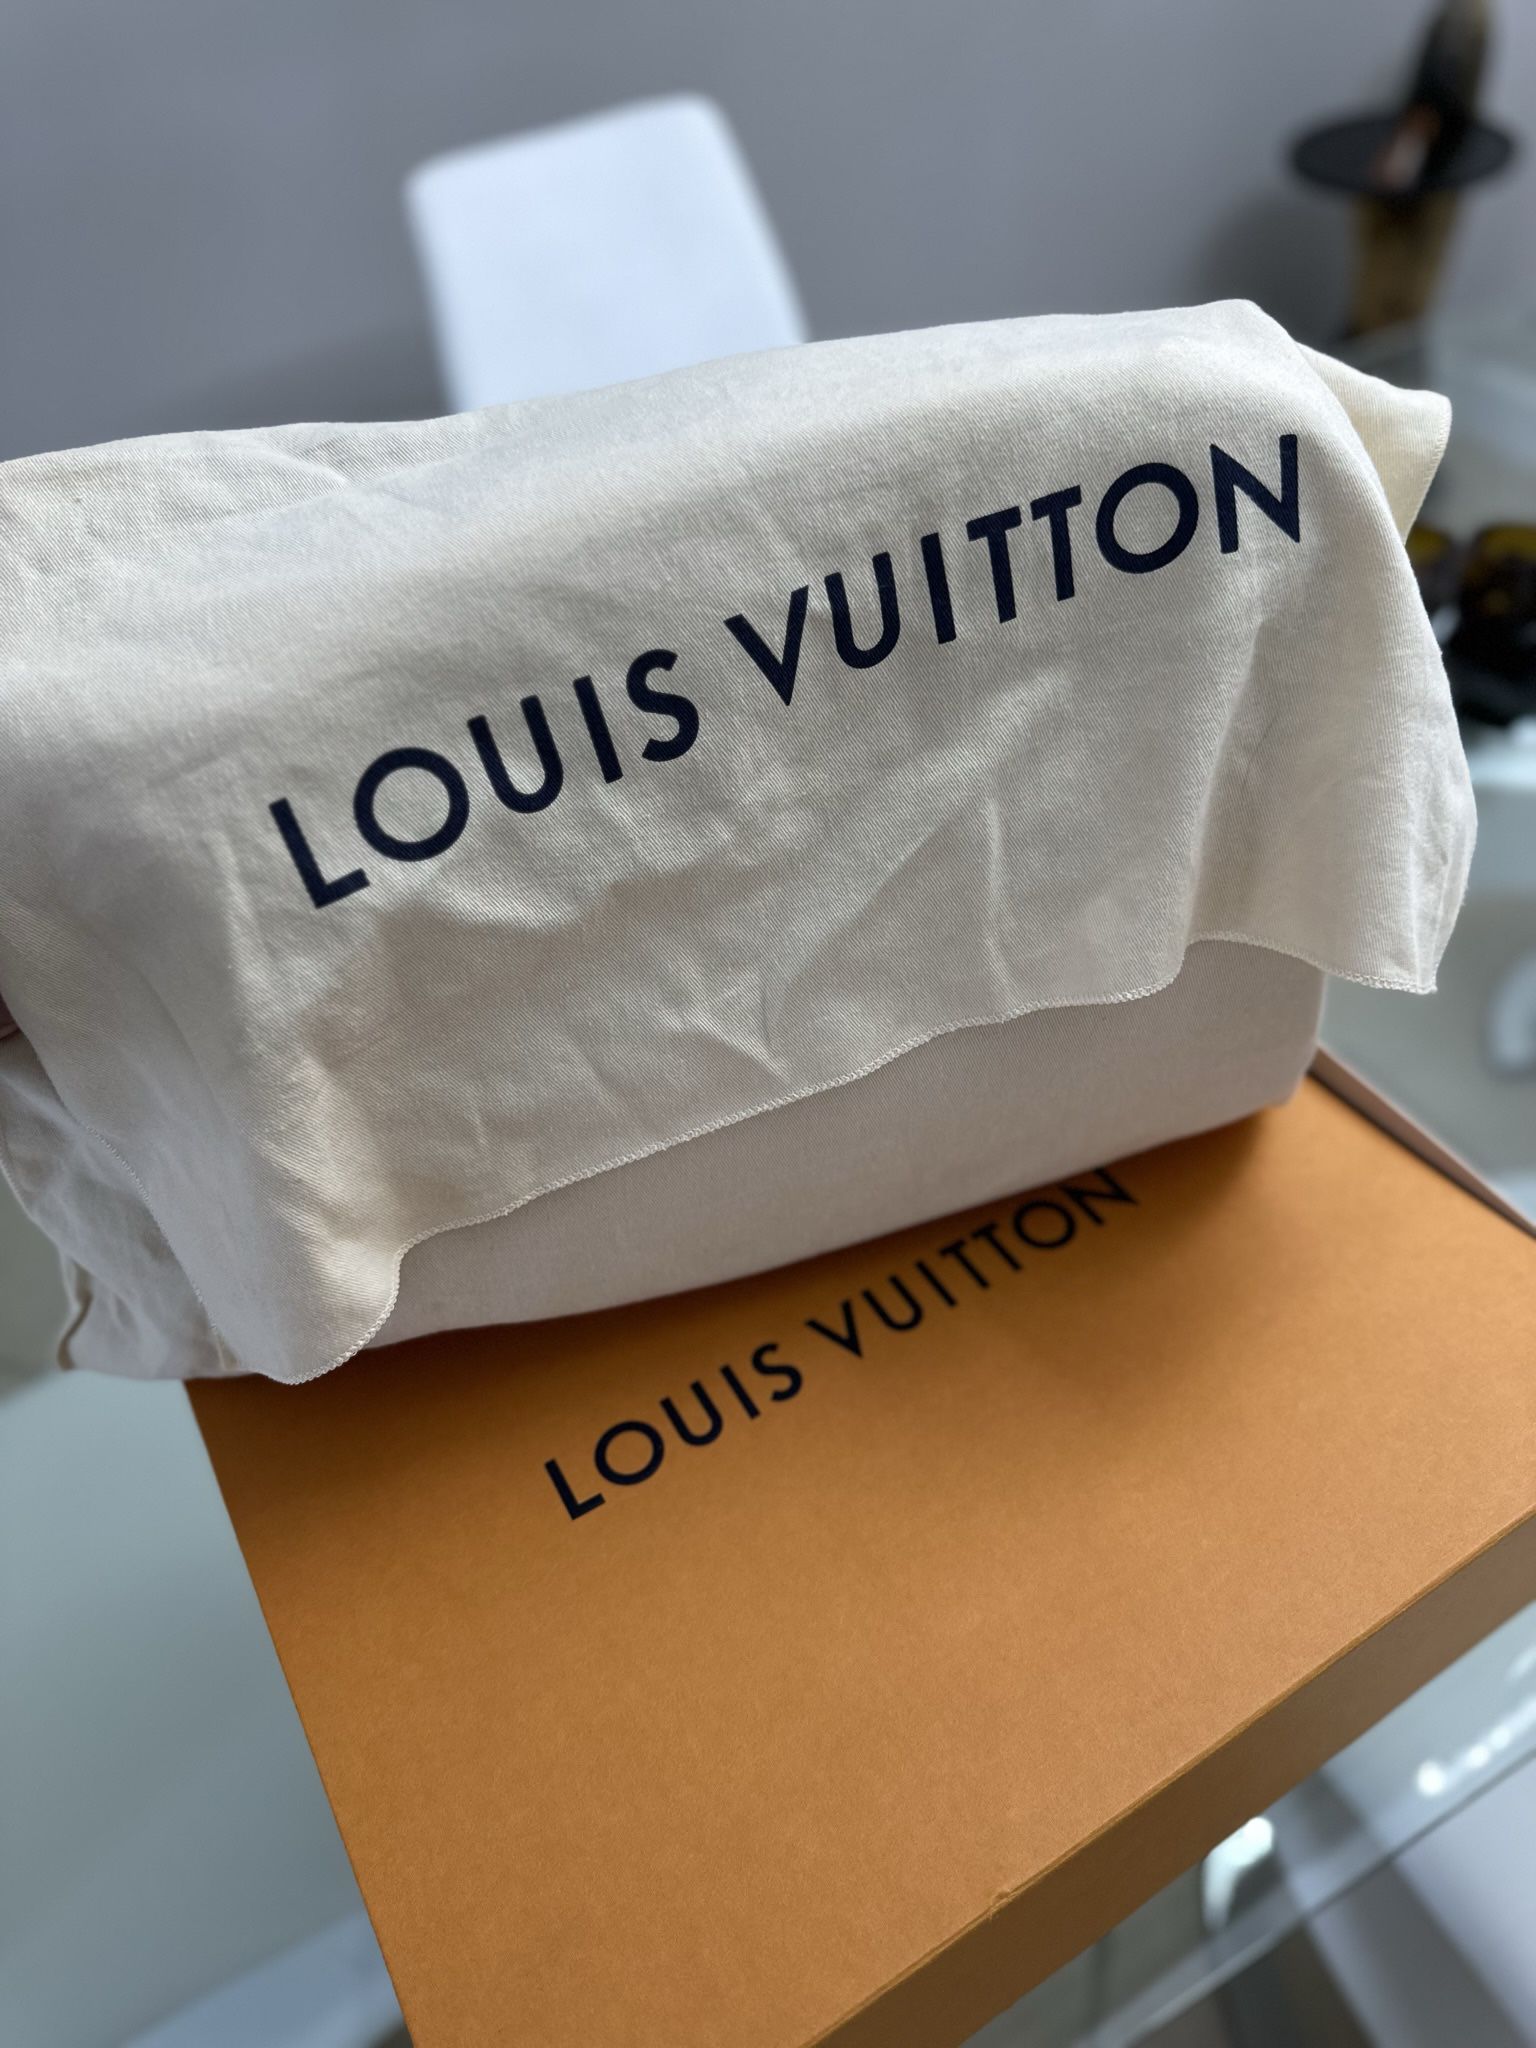 Louis Vuitton Damier Inventpdr backpack for Sale in Margate, FL - OfferUp